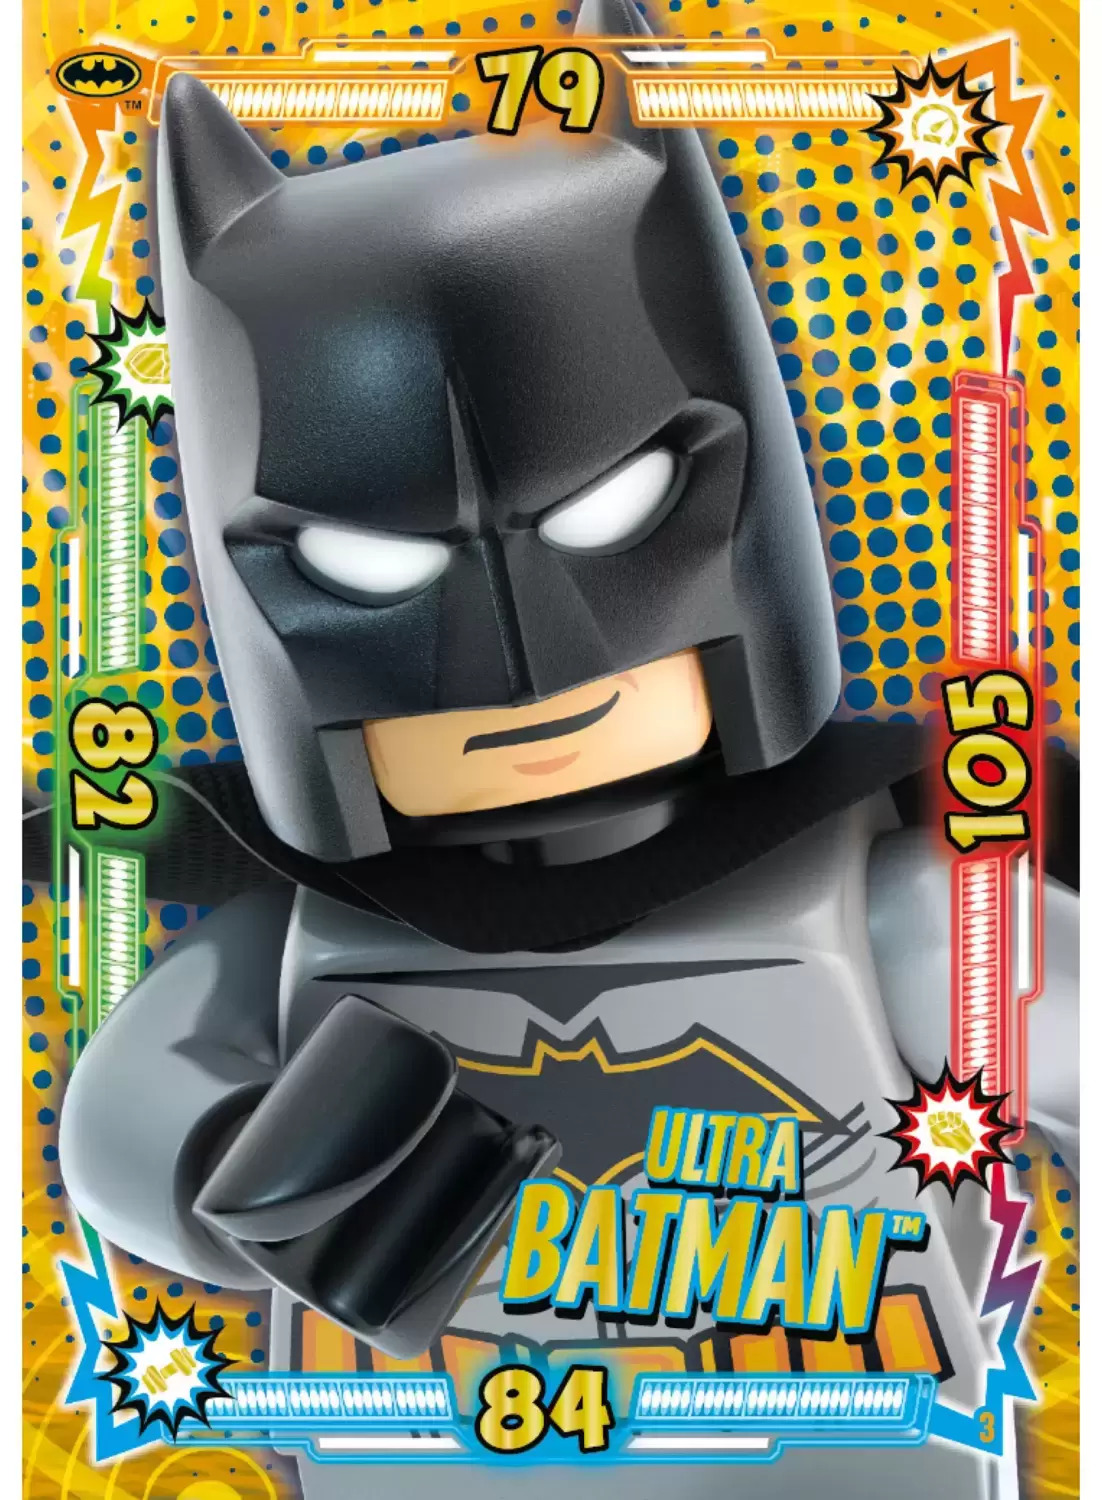 Lego Batman - Trading Cards Game - Ultra Batman